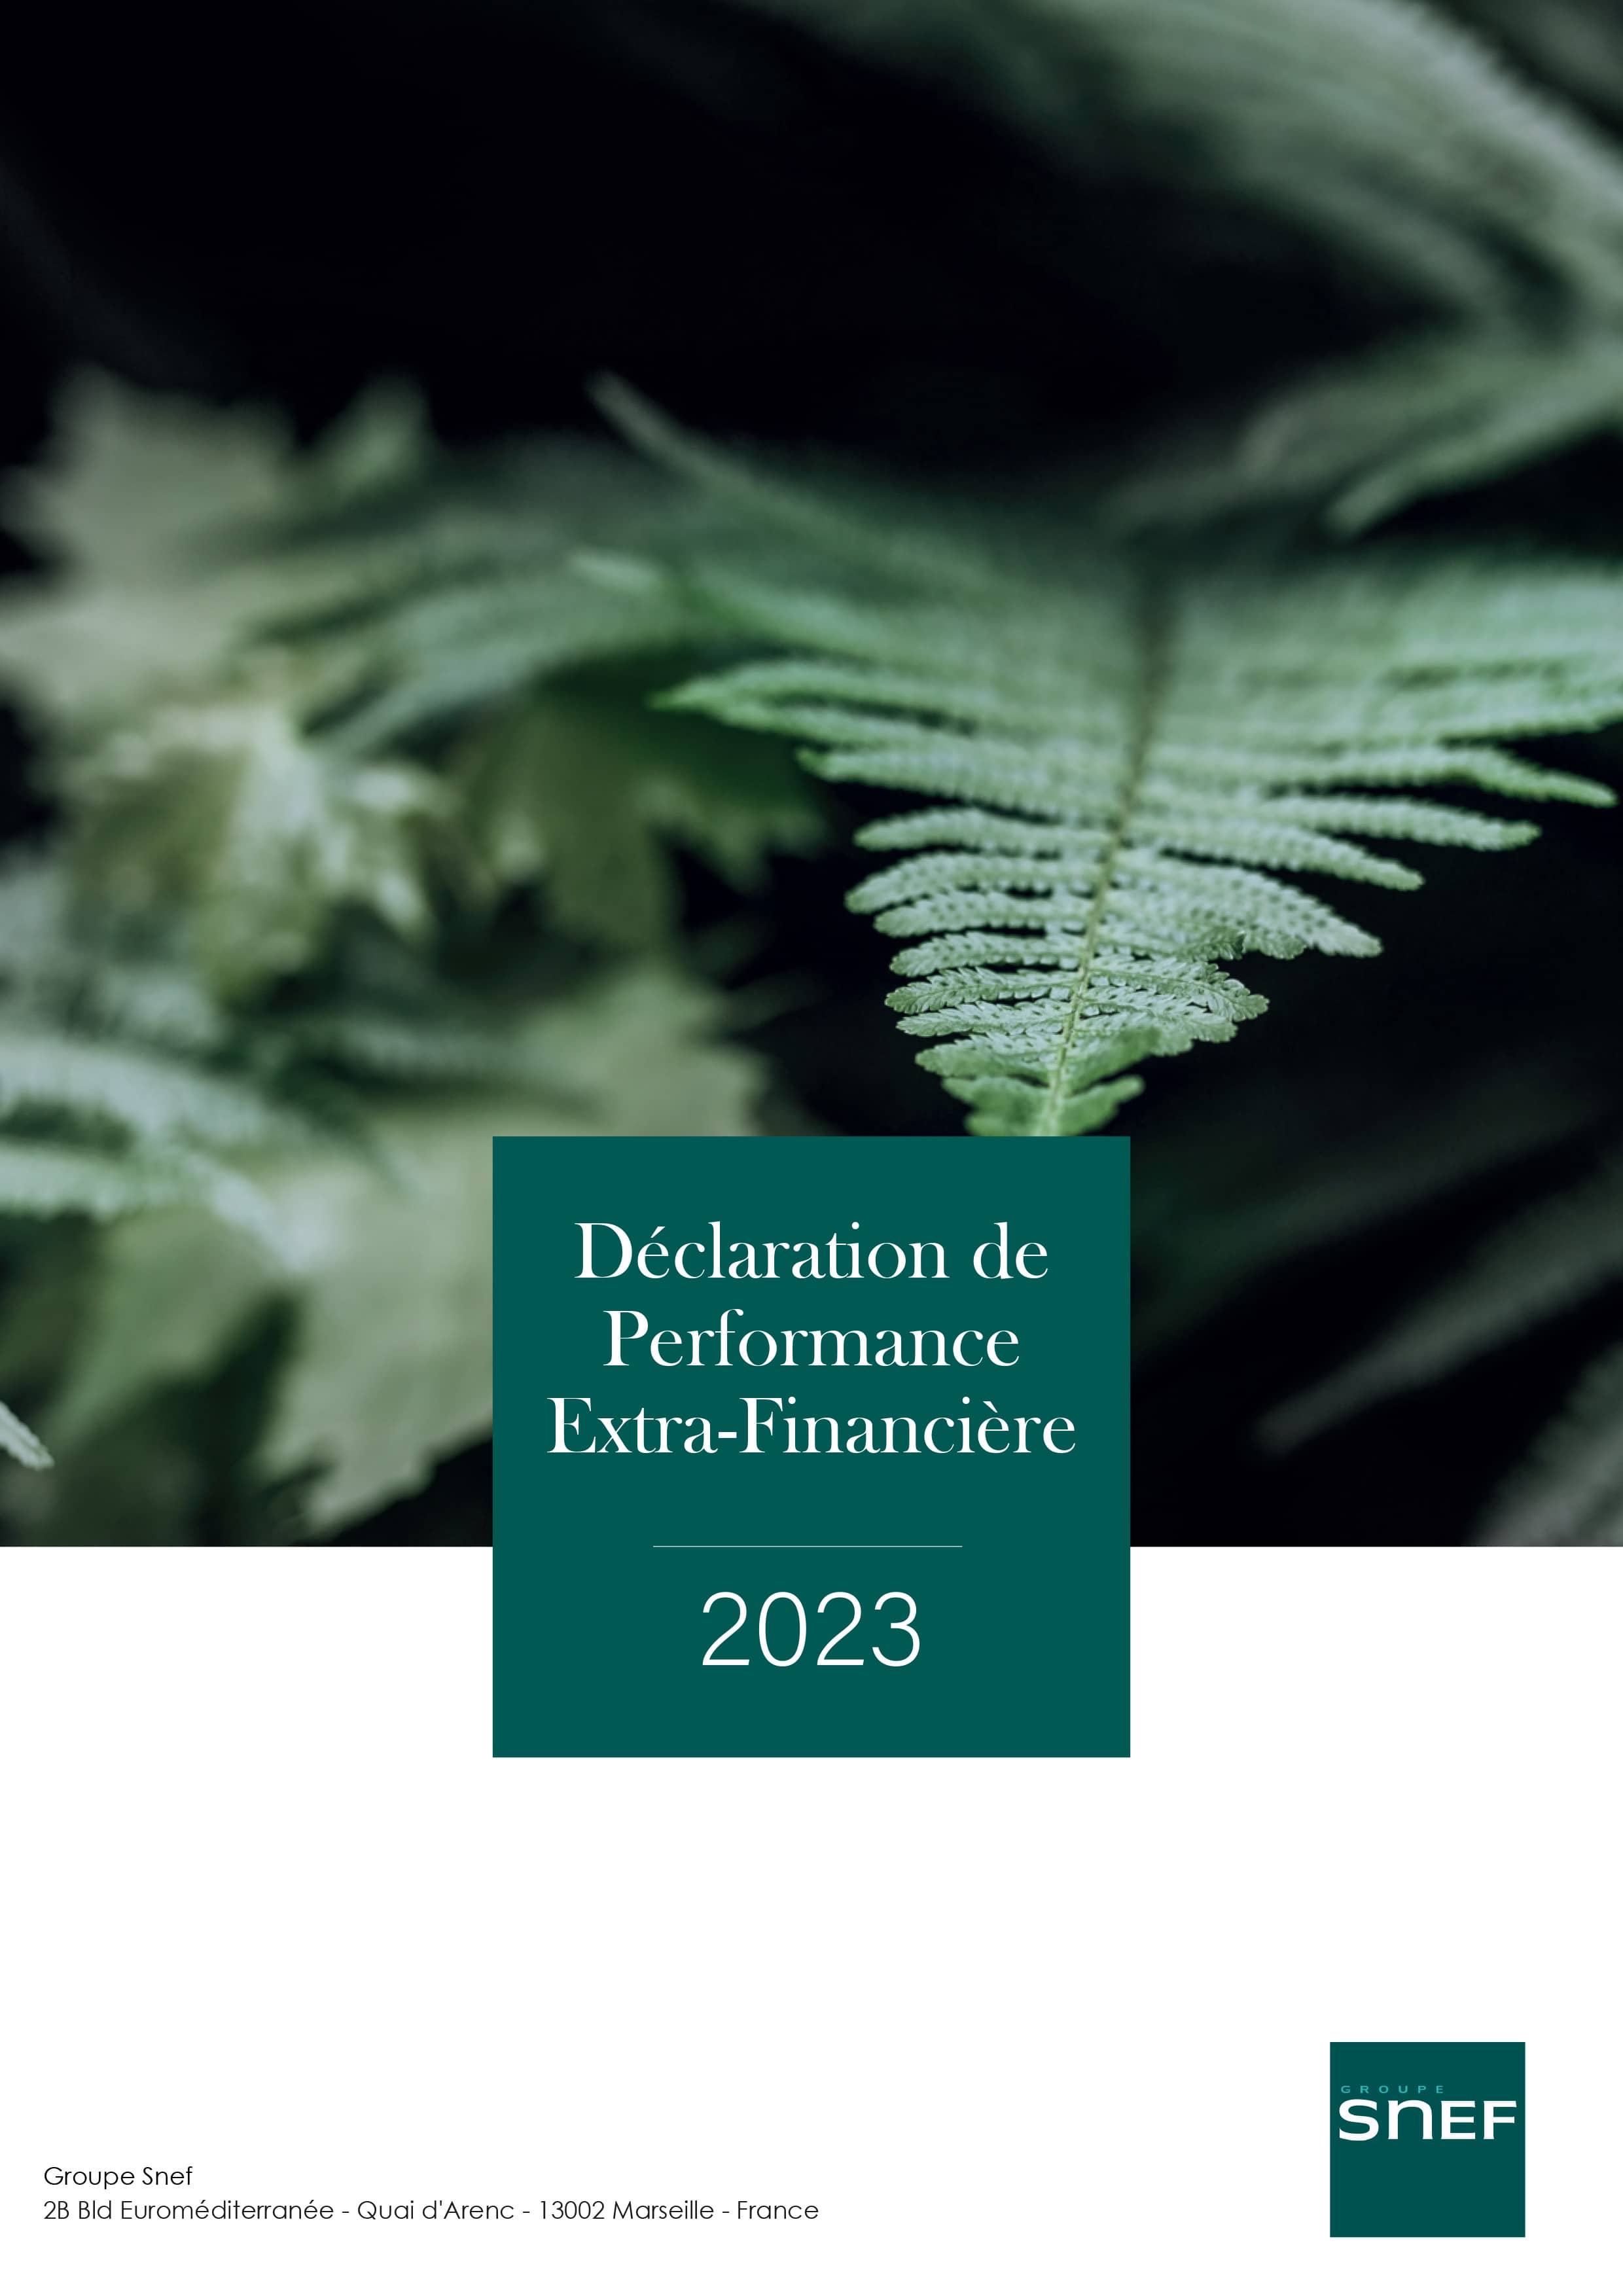 Non-Financial Performance Statement 2023